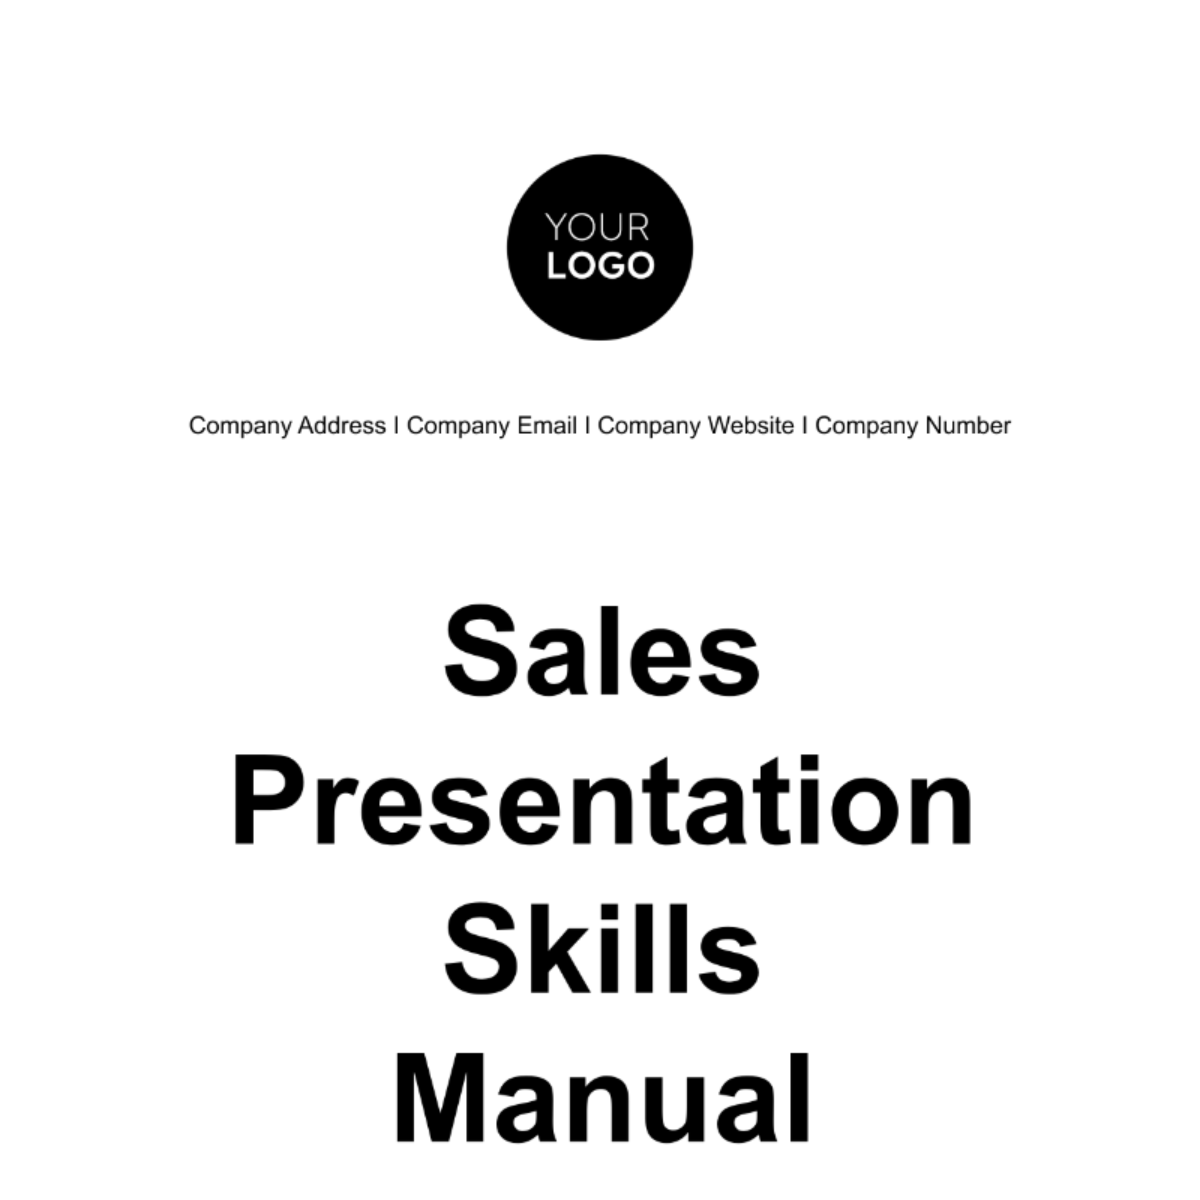 Sales Presentation Skills Manual Template